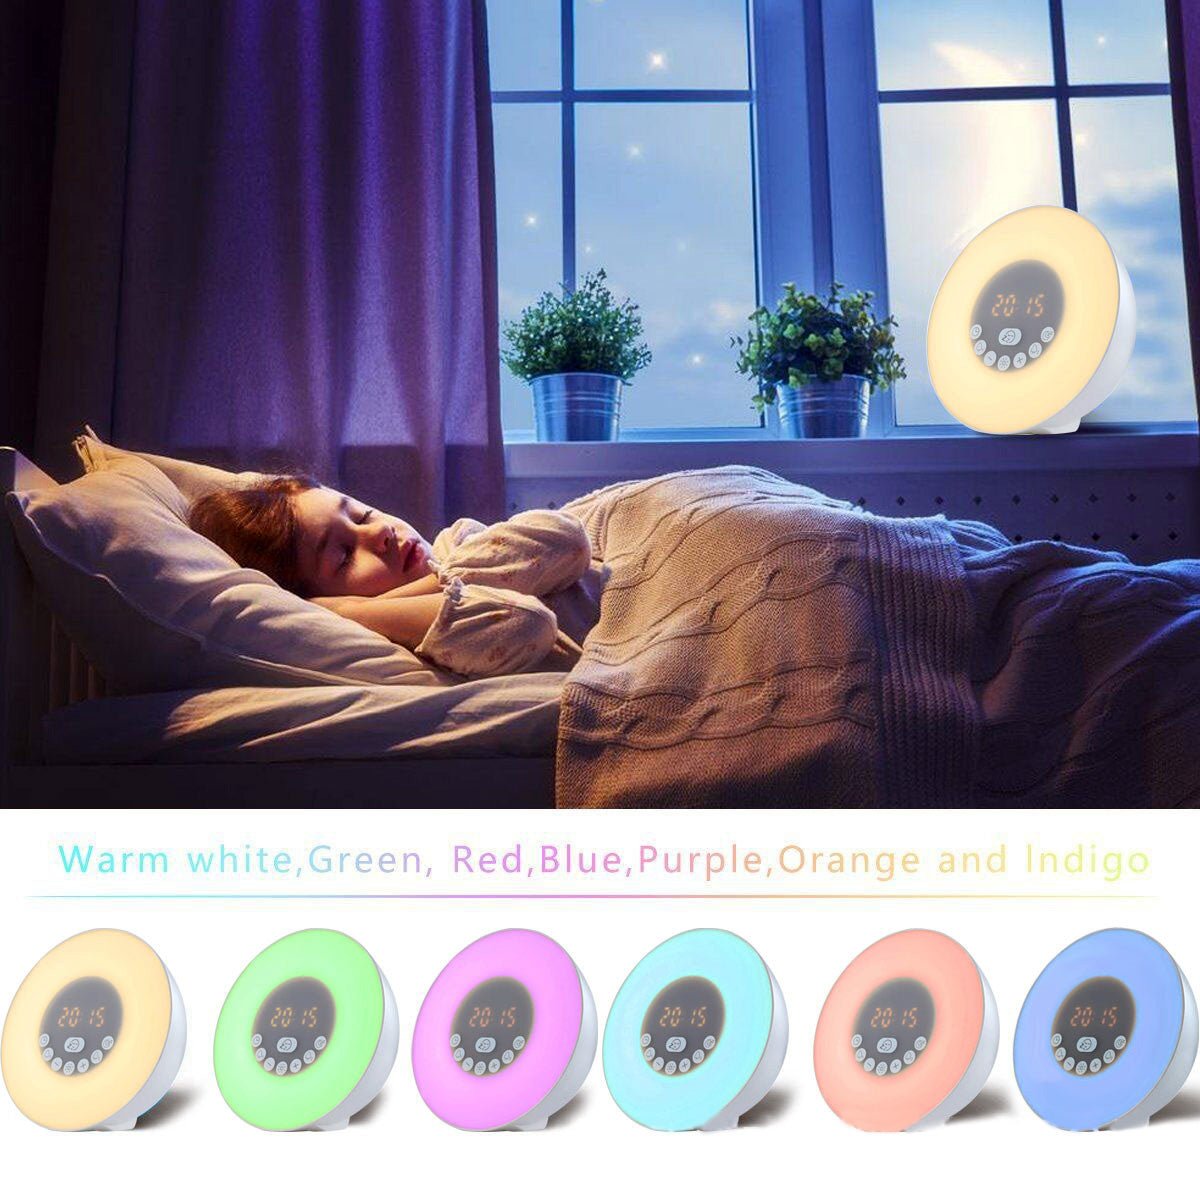 CRONY 6638G Digital Alarm Nightlight Clock LED 6 Color BT Music Clock - Edragonmall.com